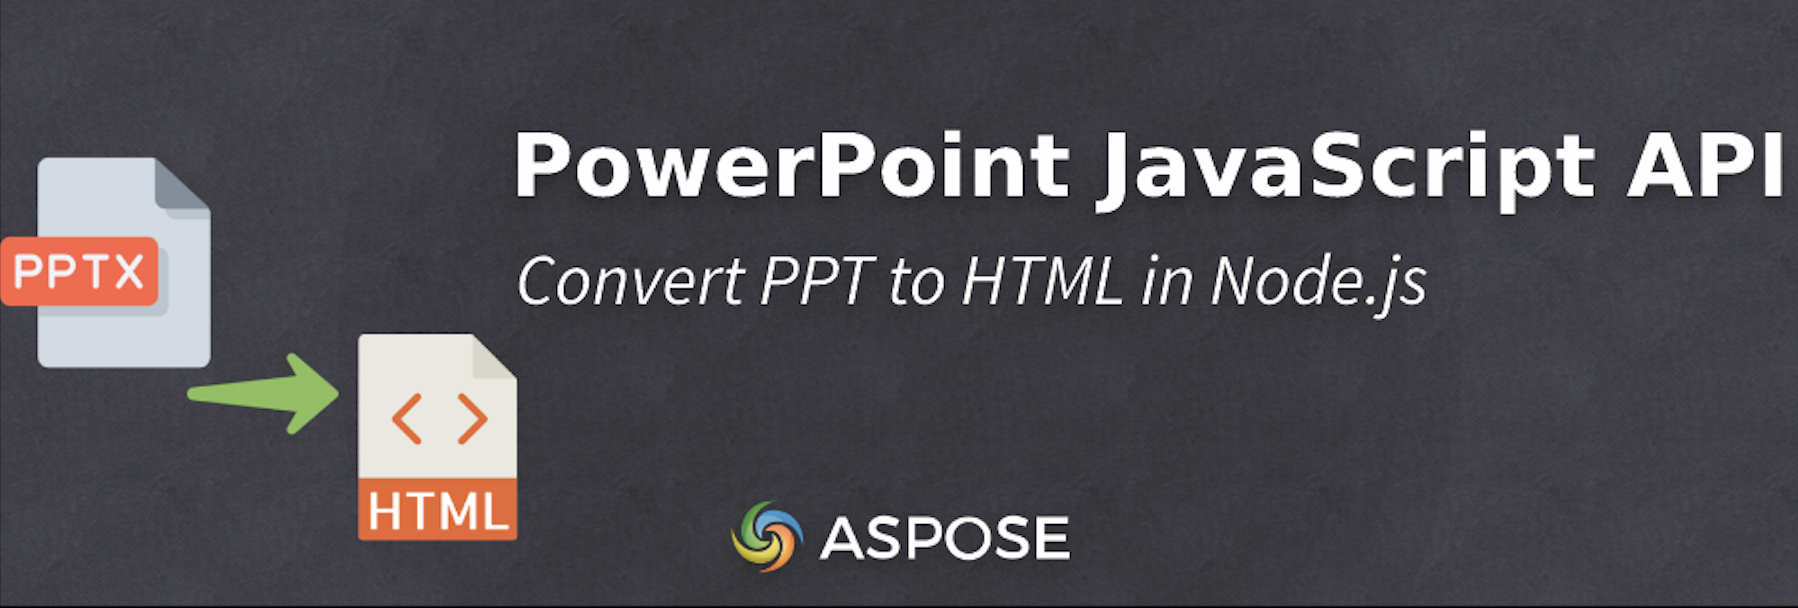 Converti PPT in HTML in Node.js - API JavaScript di PowerPoint